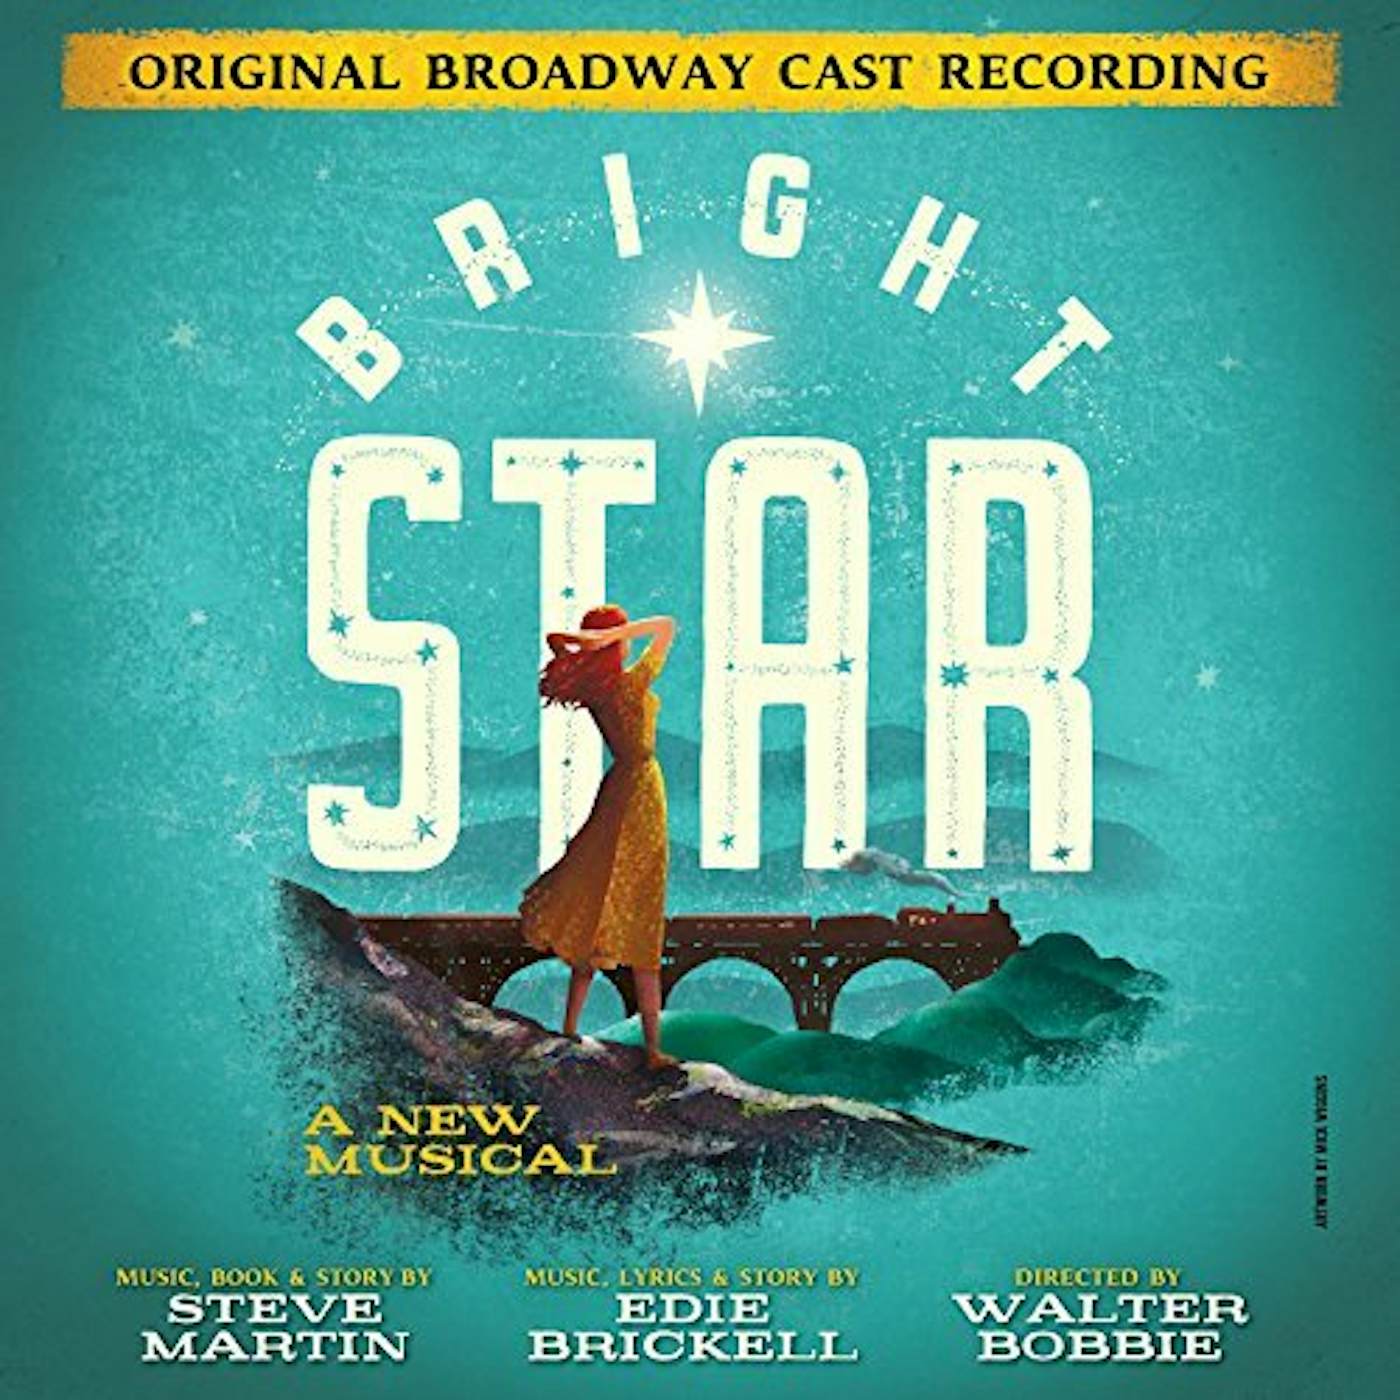 Steve Martin BRIGHT STAR - O.B.C. CD